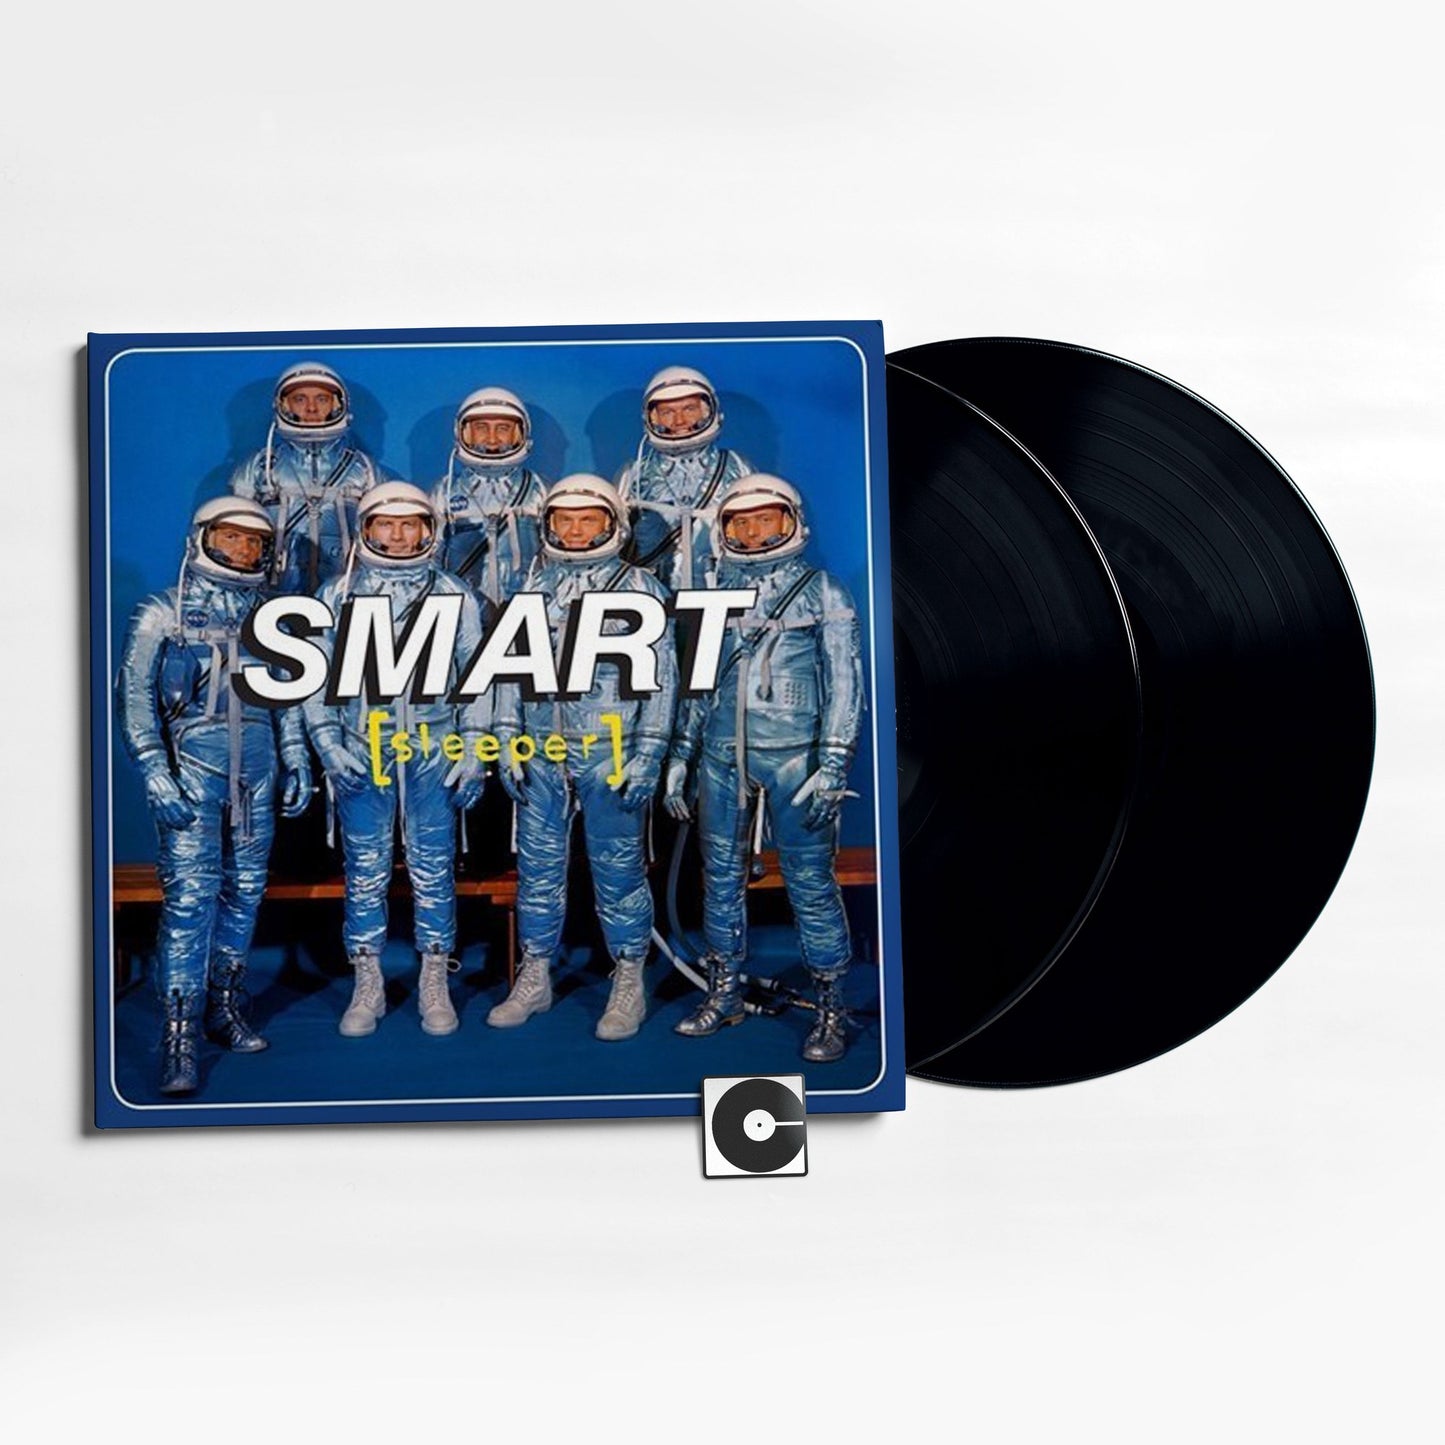 Sleeper - "Smart: 25th Anniversary"